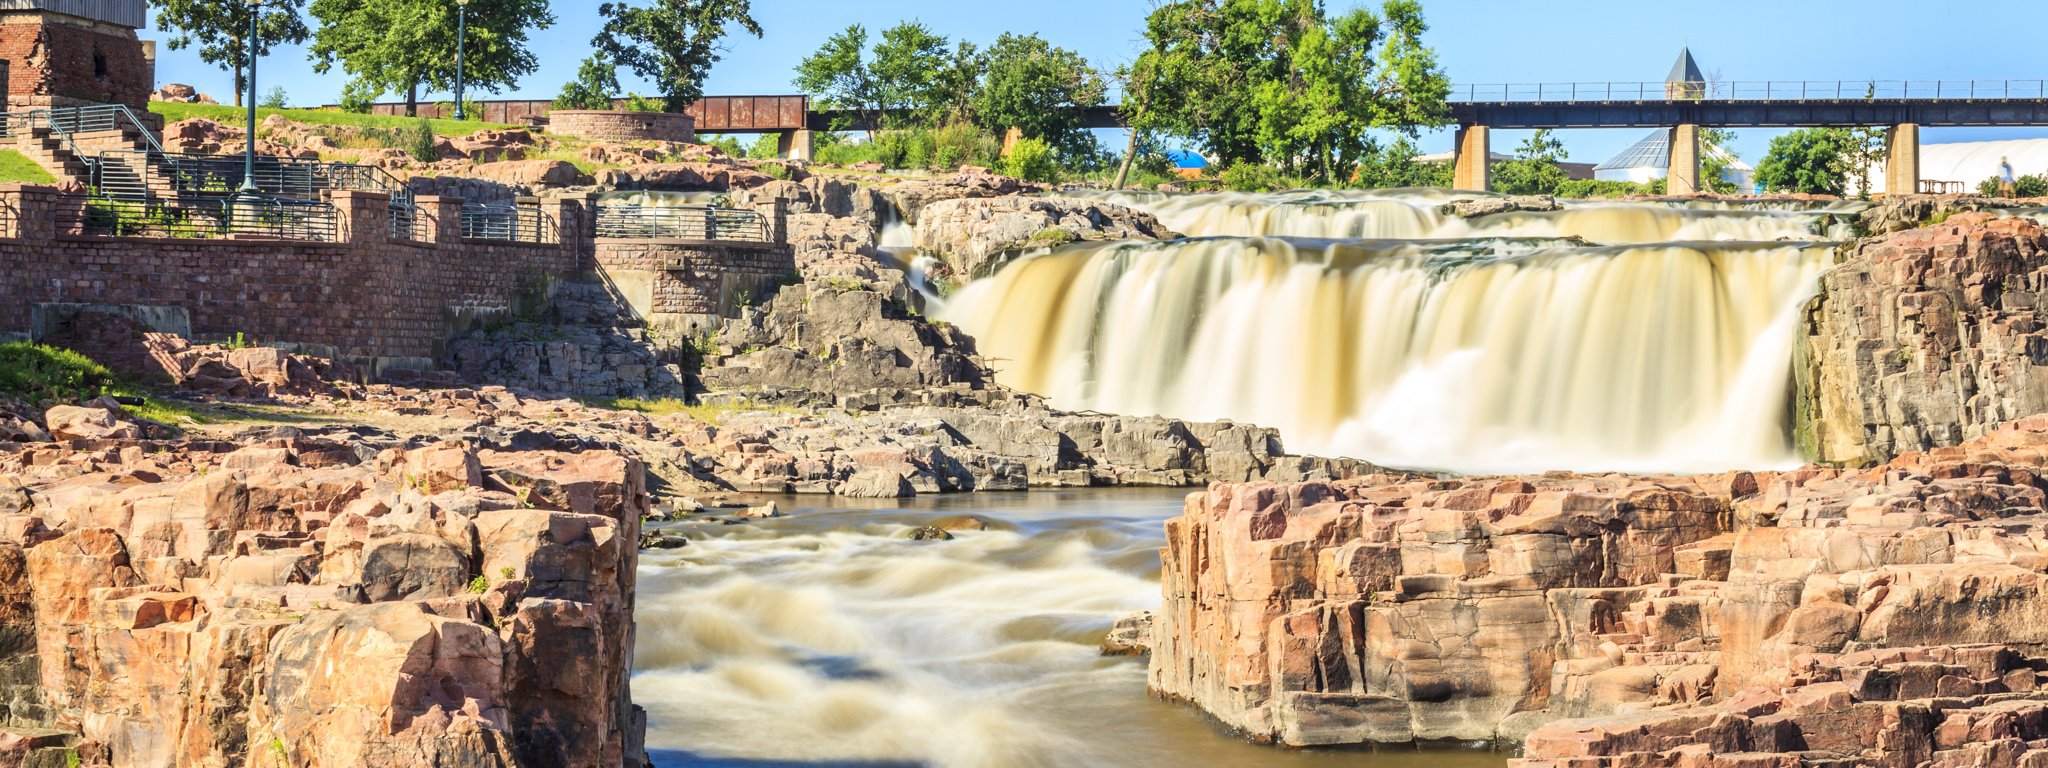 12 Reasons To Visit Sioux Falls, South Dakota